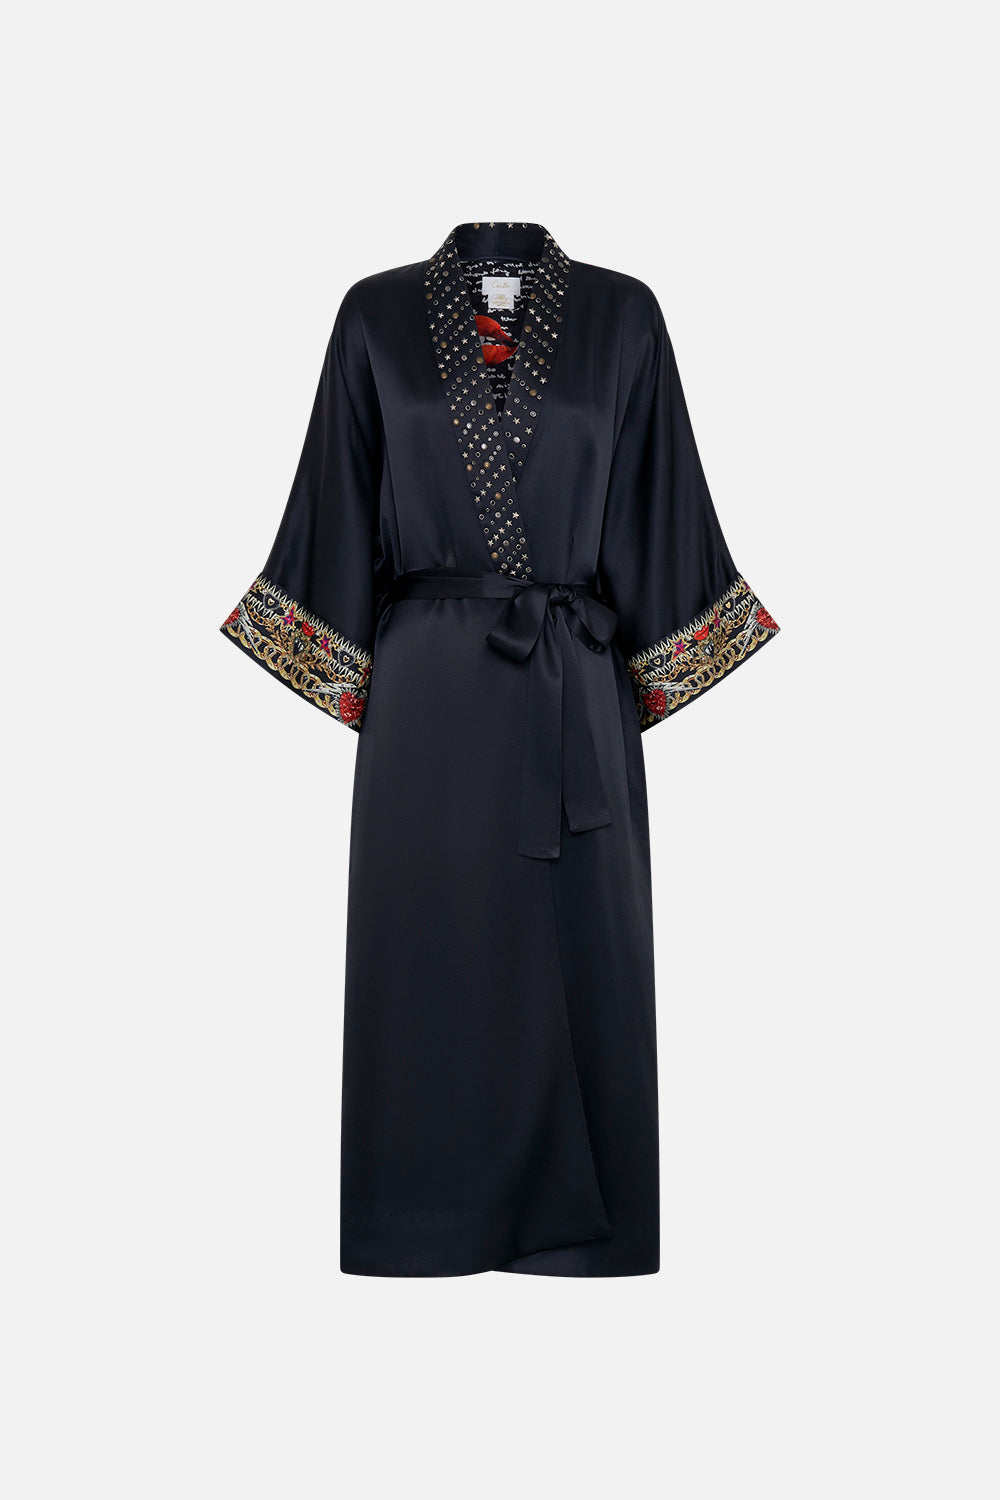 Product view of CAMILLA black silk robe in Radical Rebirth print